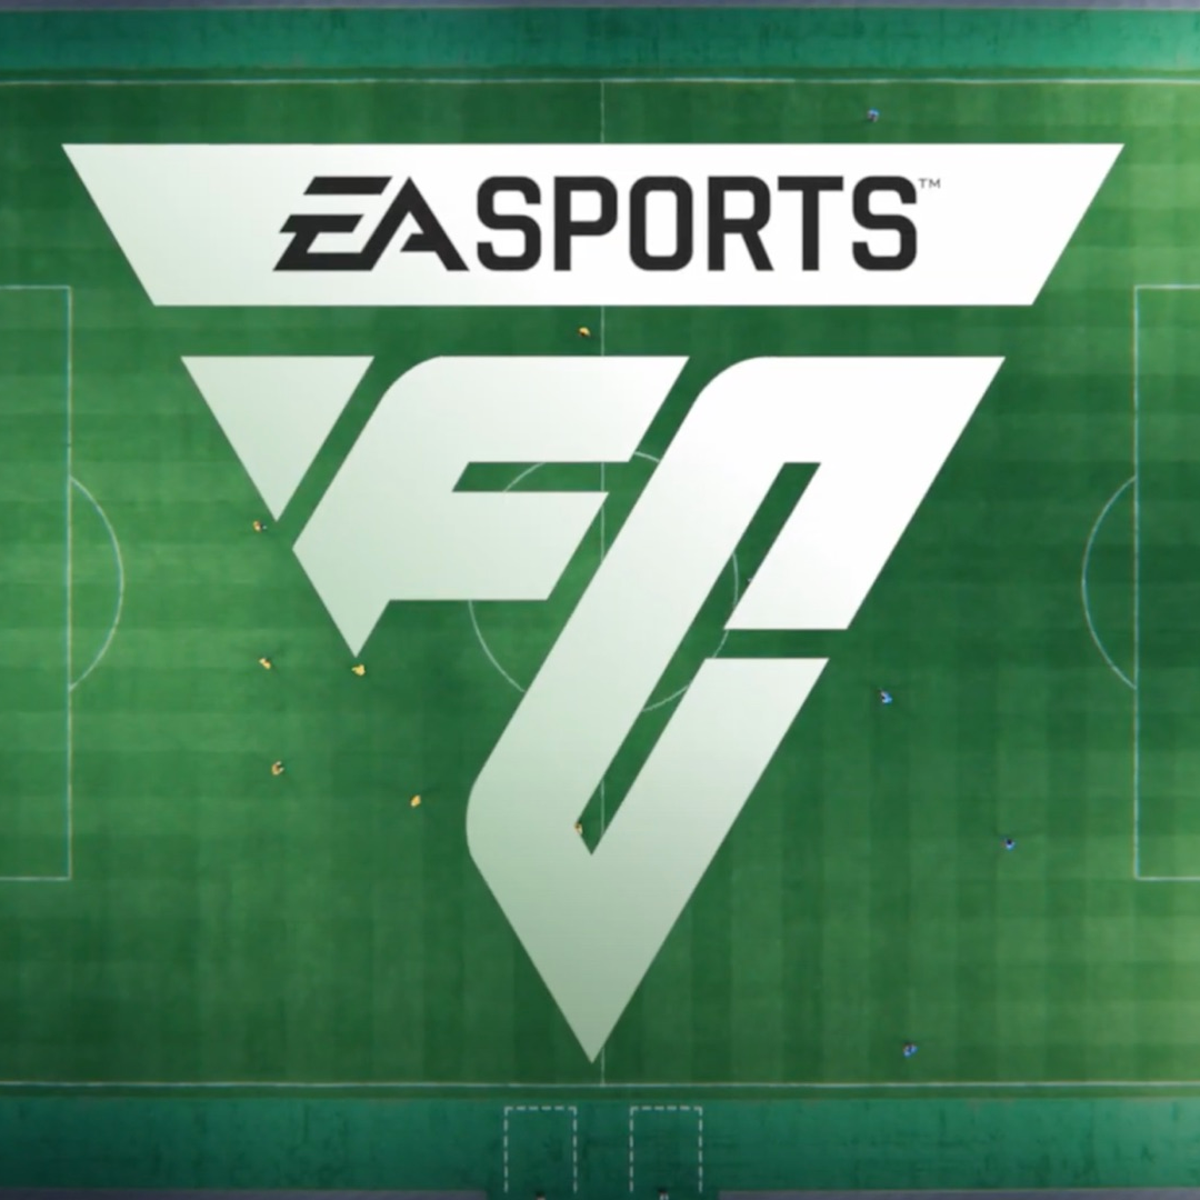 EA Sports FC24 gets first trailer, gameplay details, September